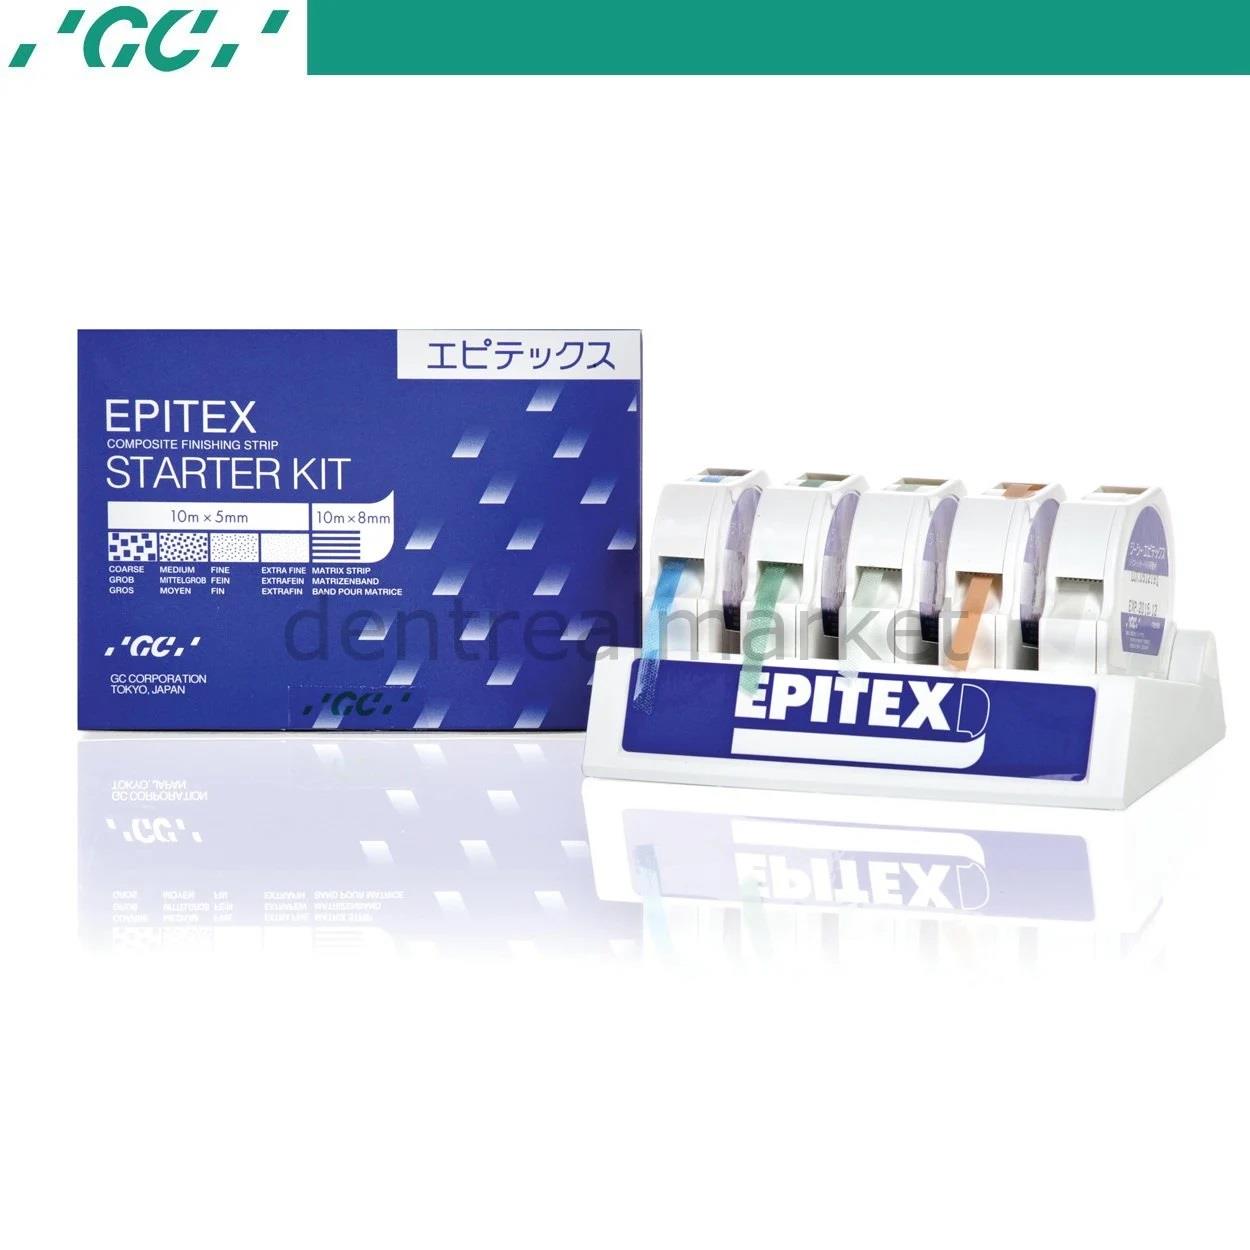 DentrealStore - Gc Dental Epitex Strip Starter Kit - Finishing and Polishing Strips